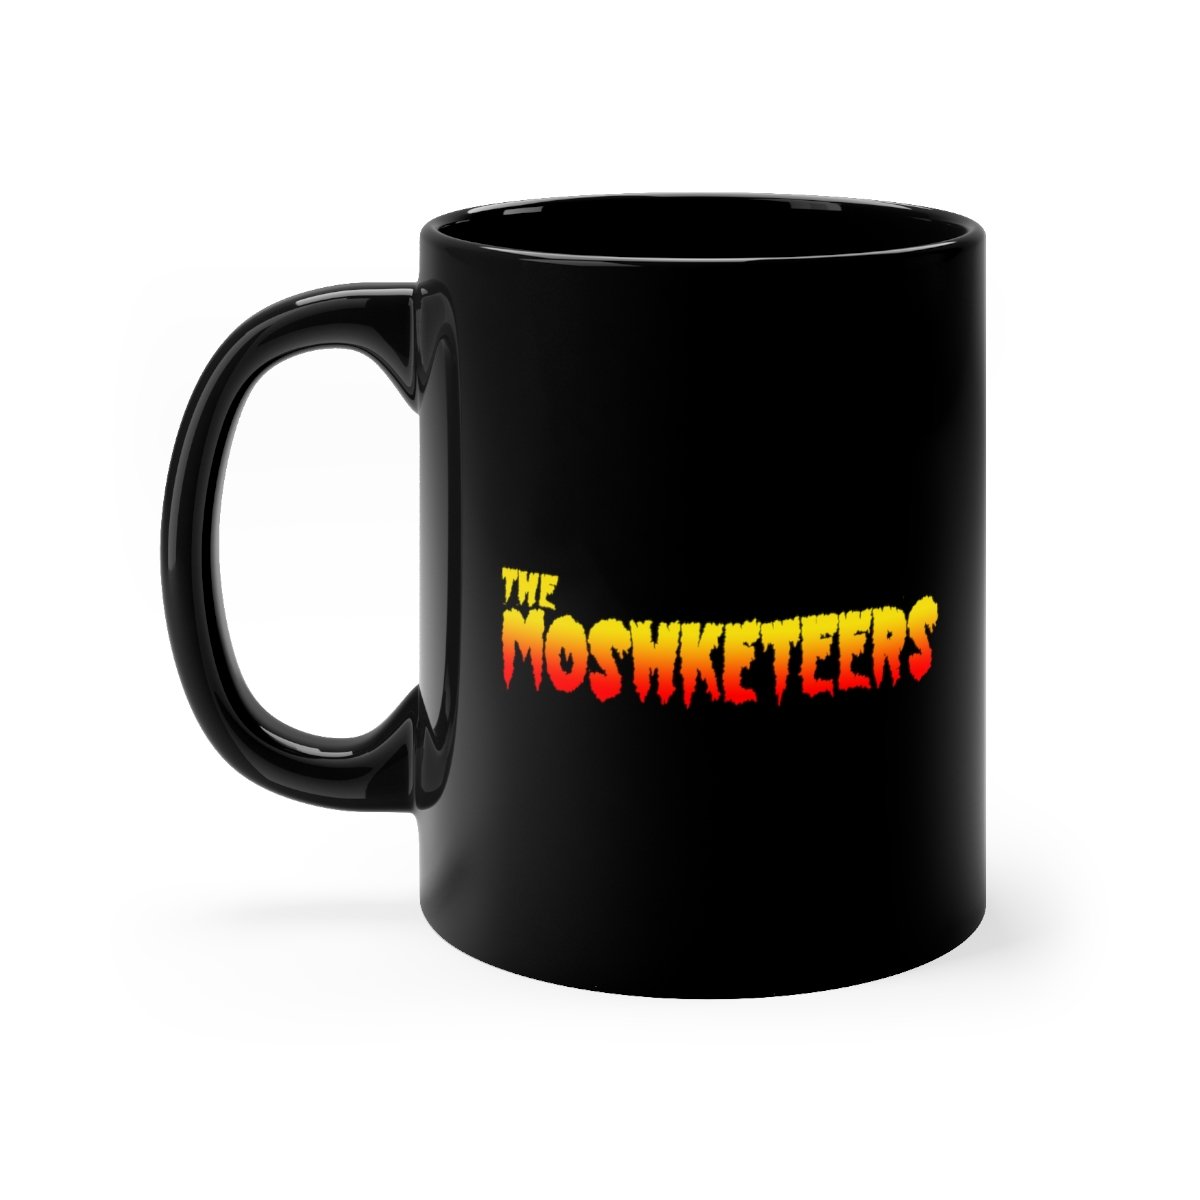 The Moshketeers Logo Black mug 11oz